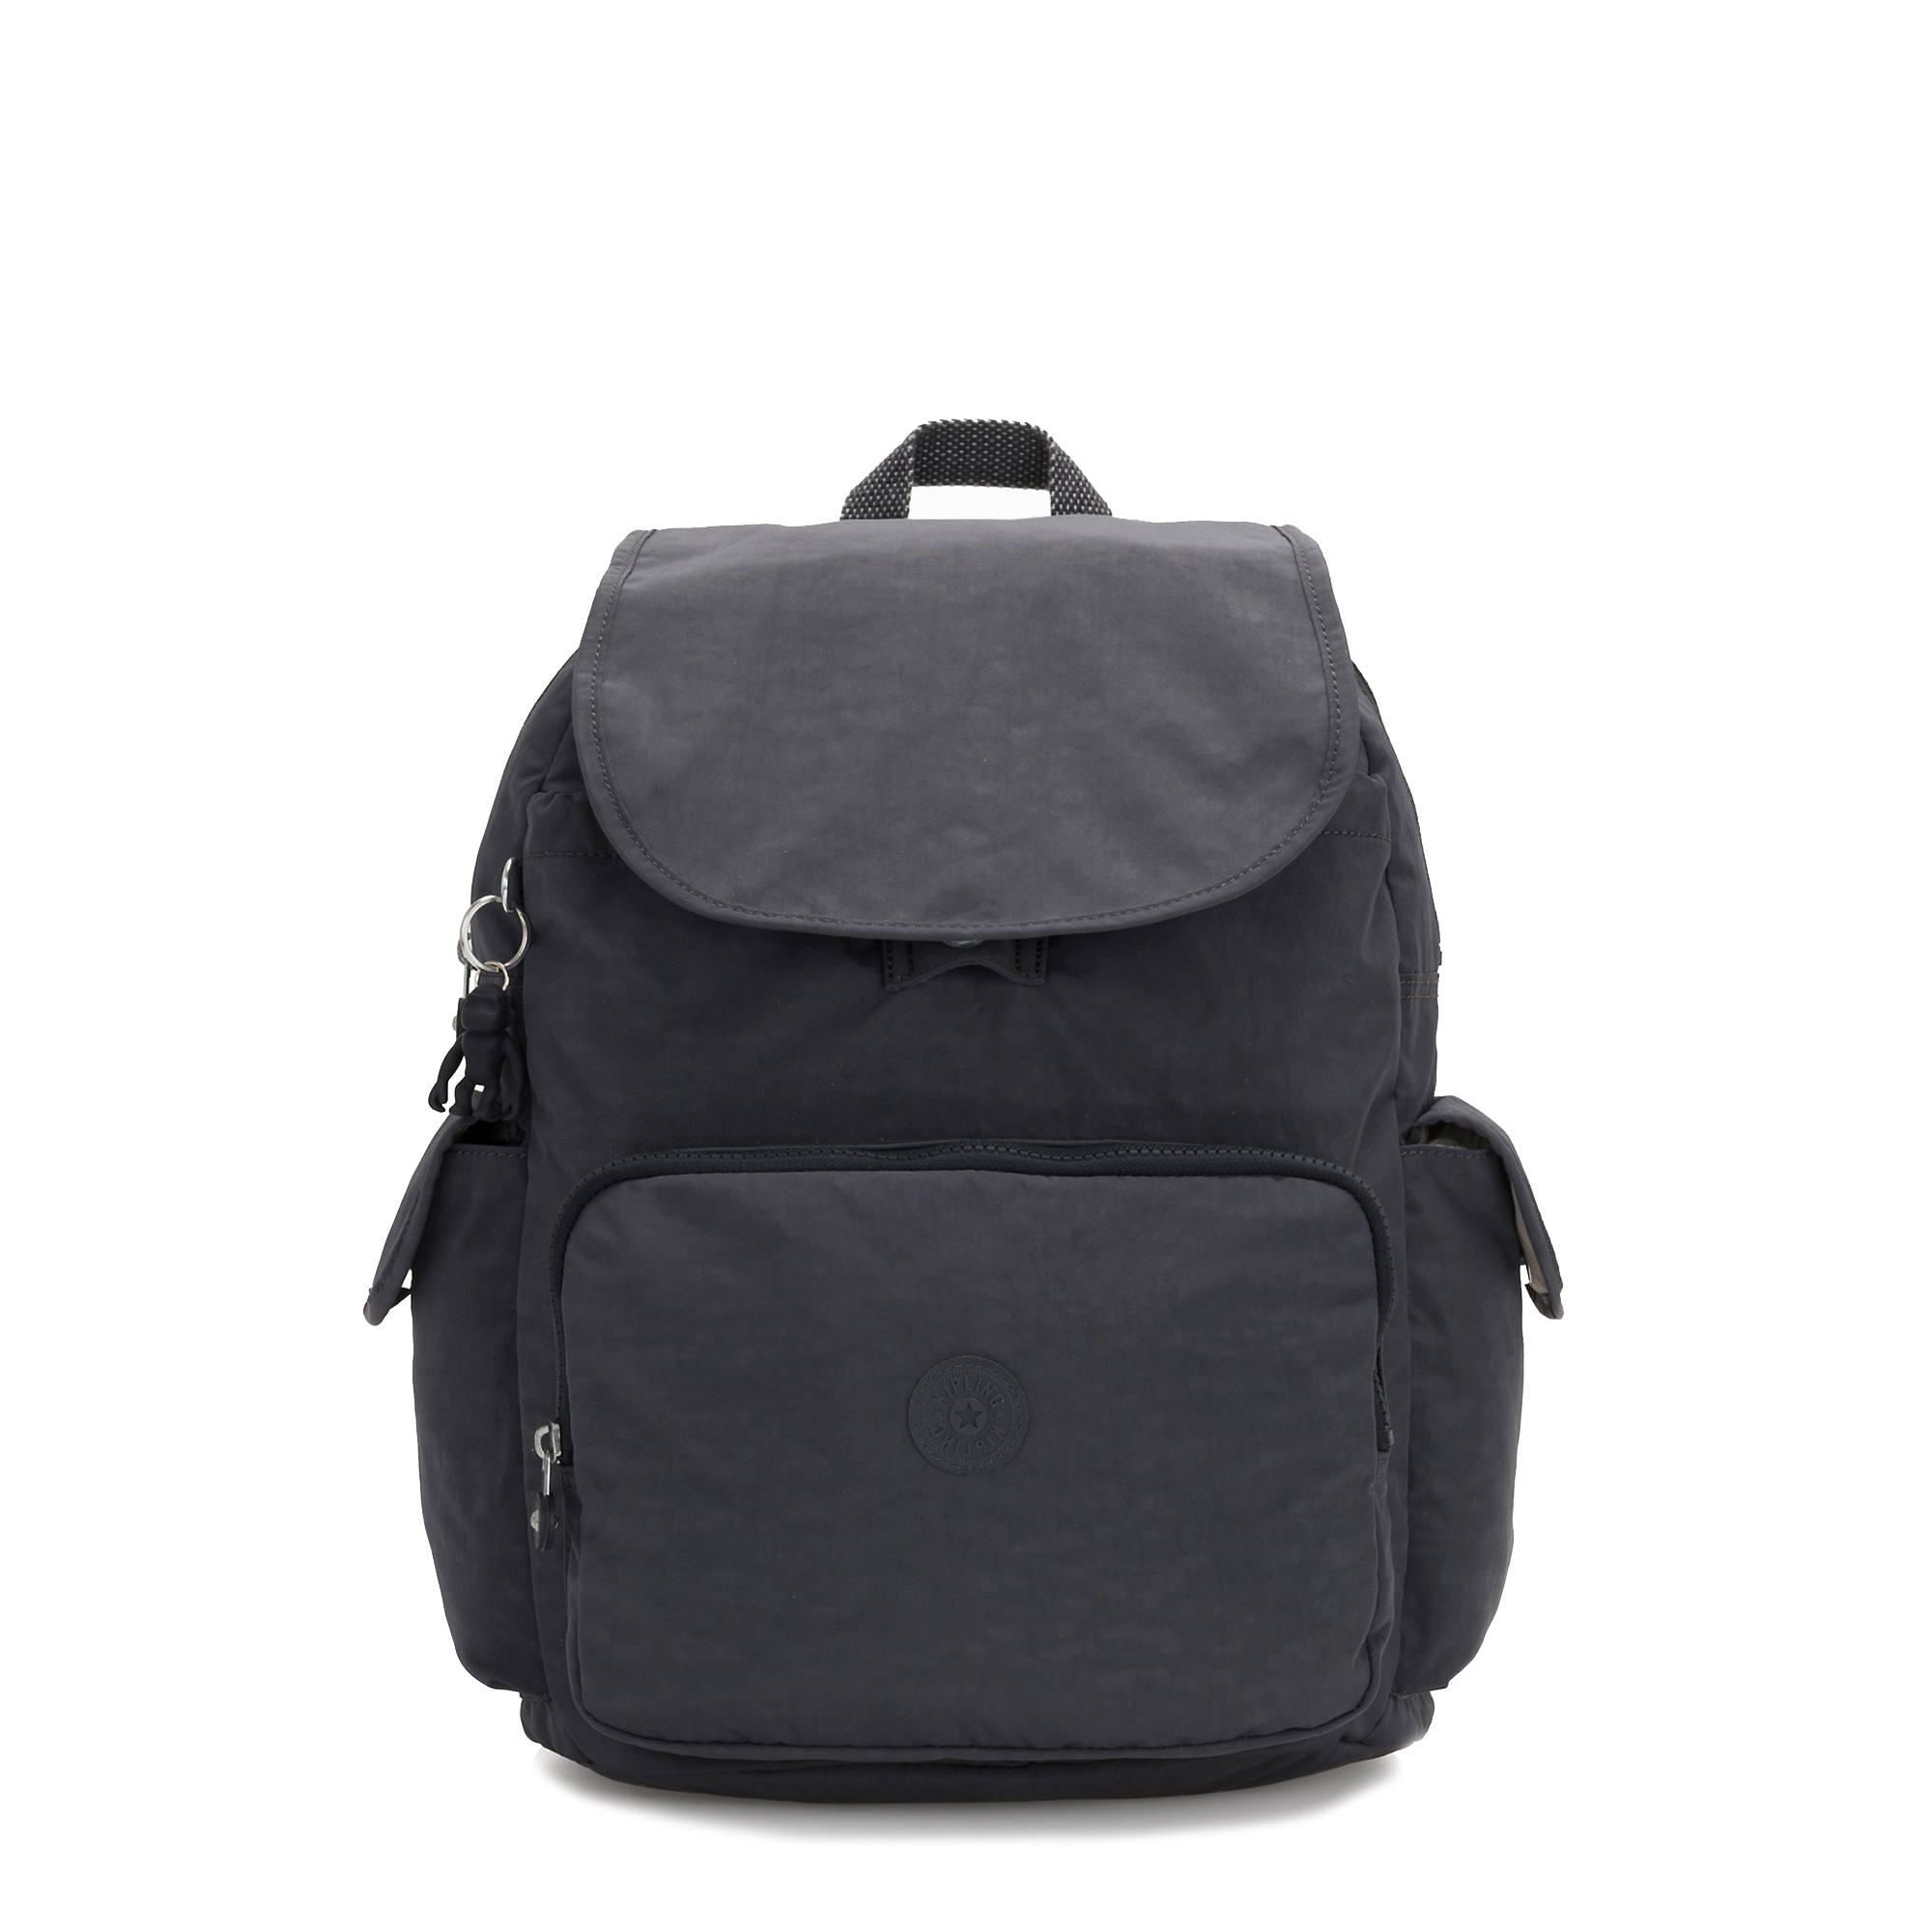 Black Backpack Diaper Bag | Trend Bags